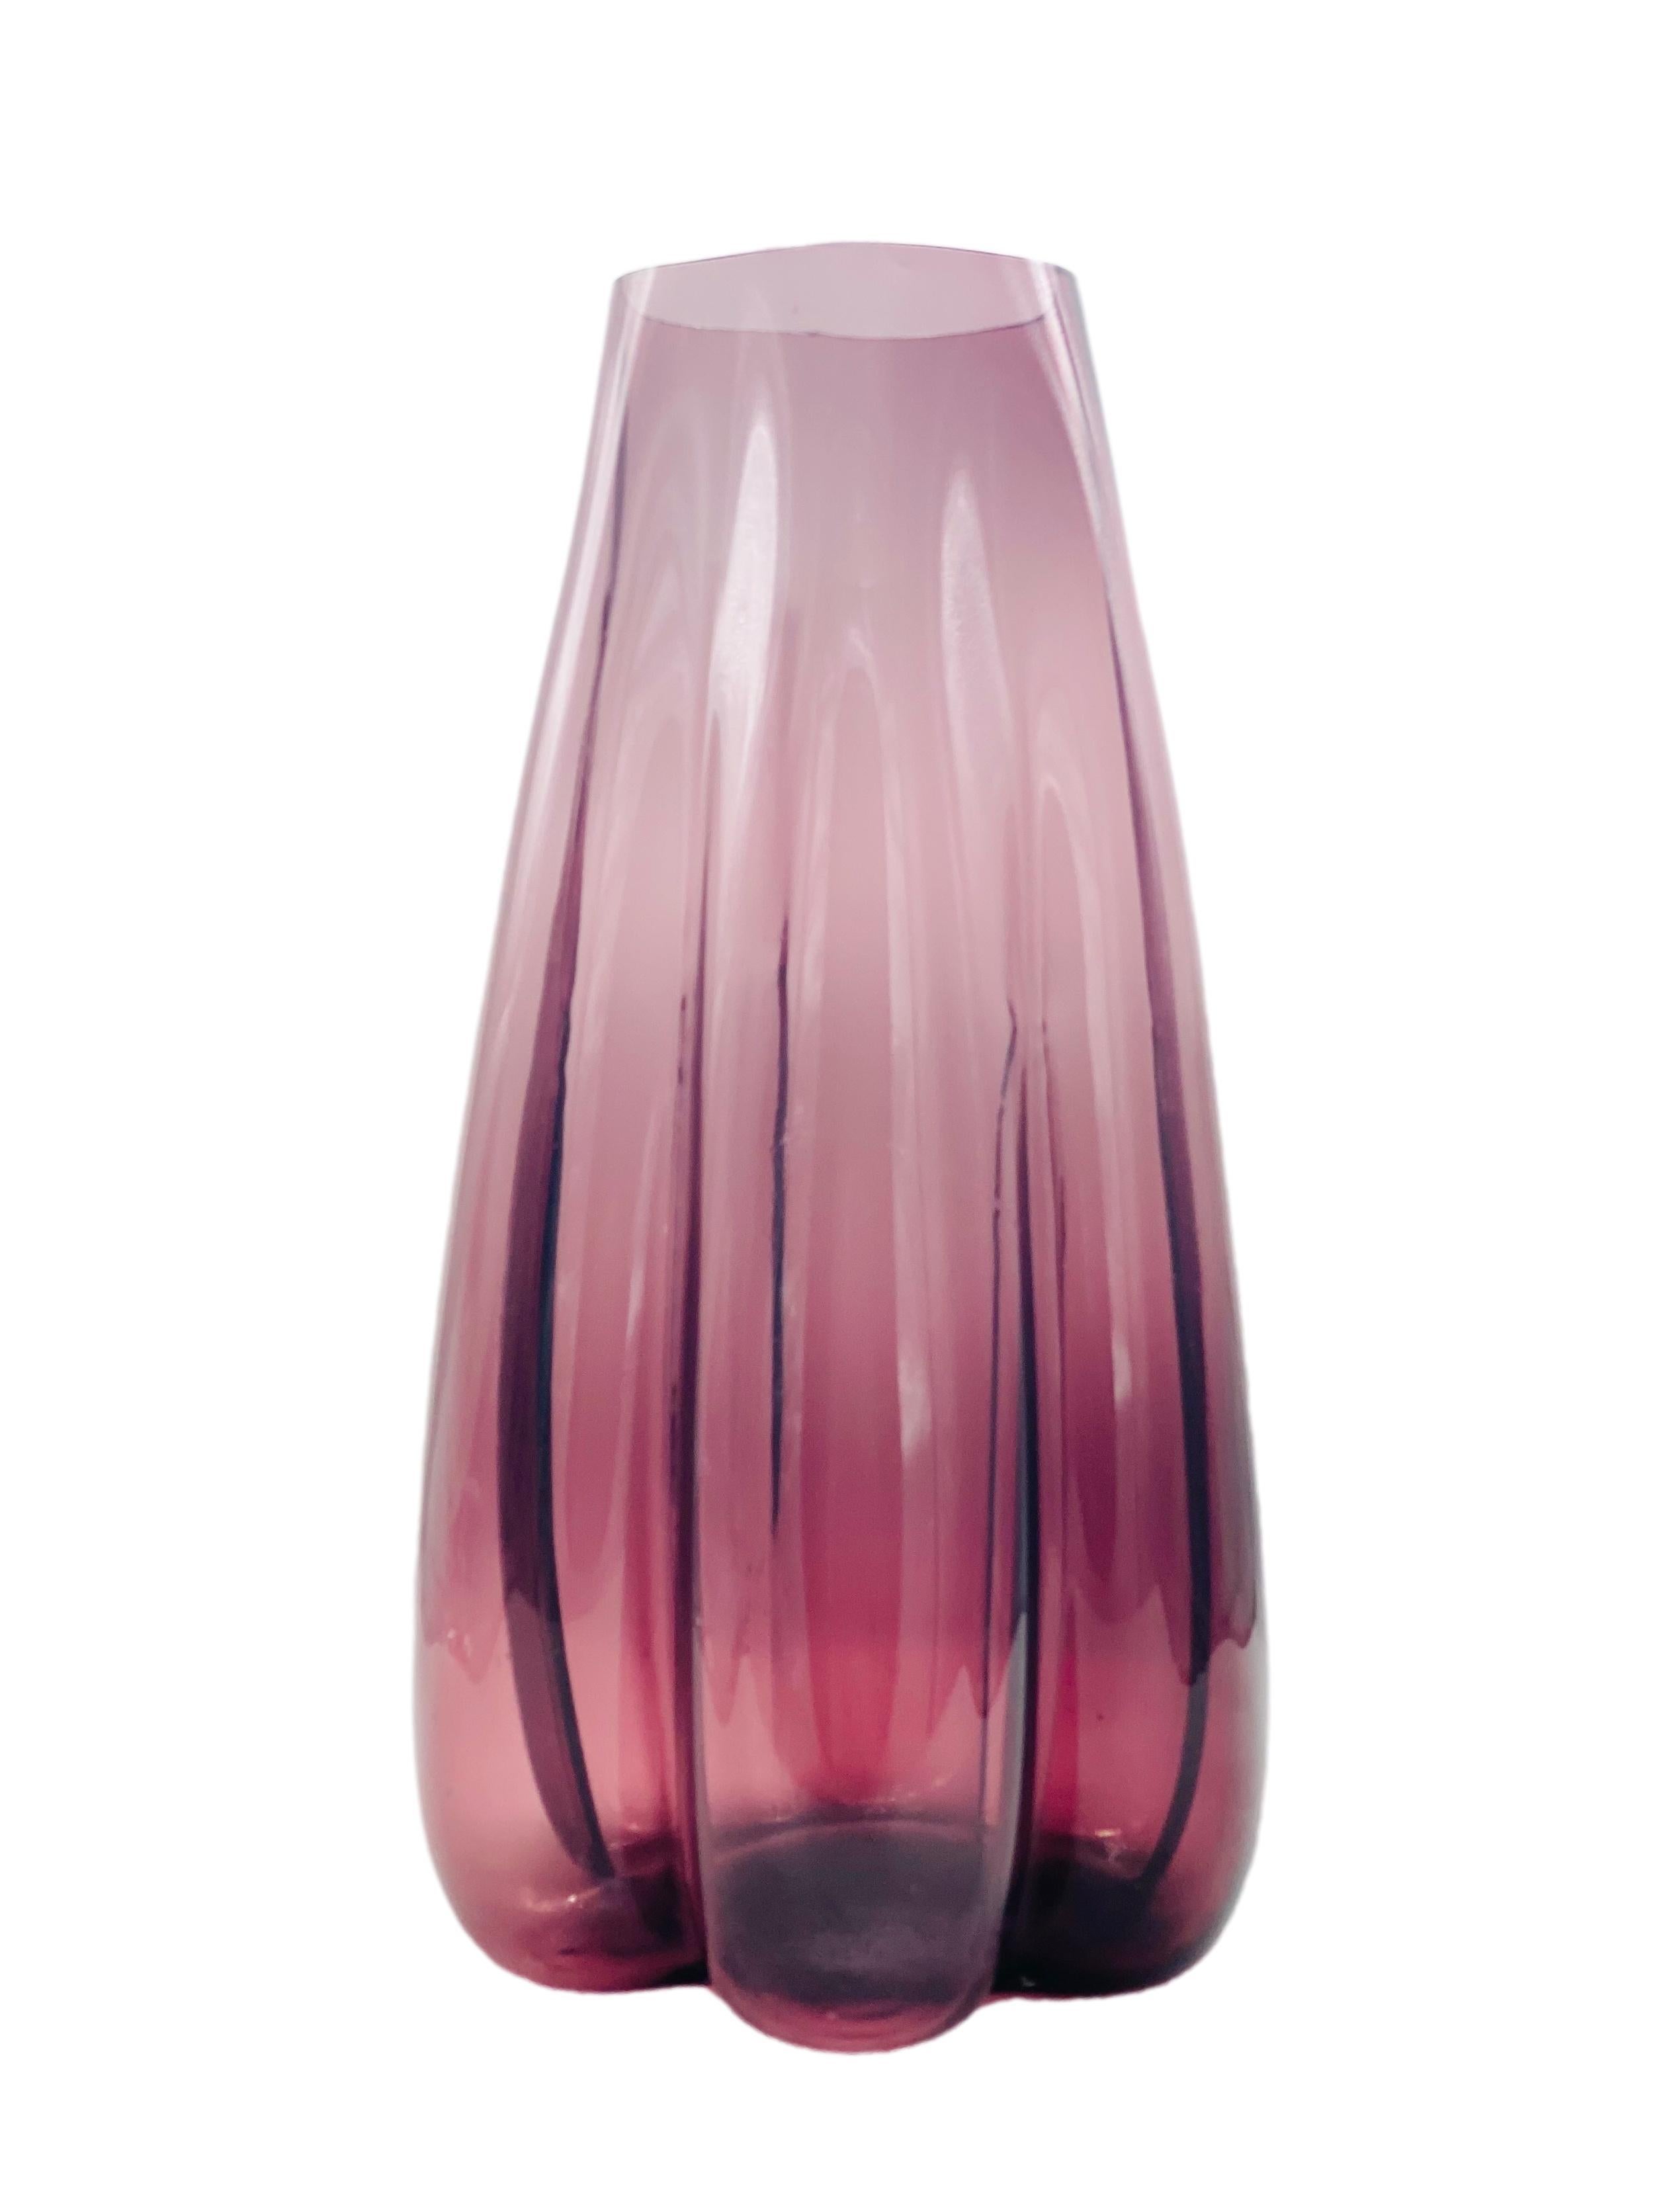 Mid-Century Modern Alessadro Mendini Style Venetian Violet Murano Glass Vase, Italy 1970s For Sale